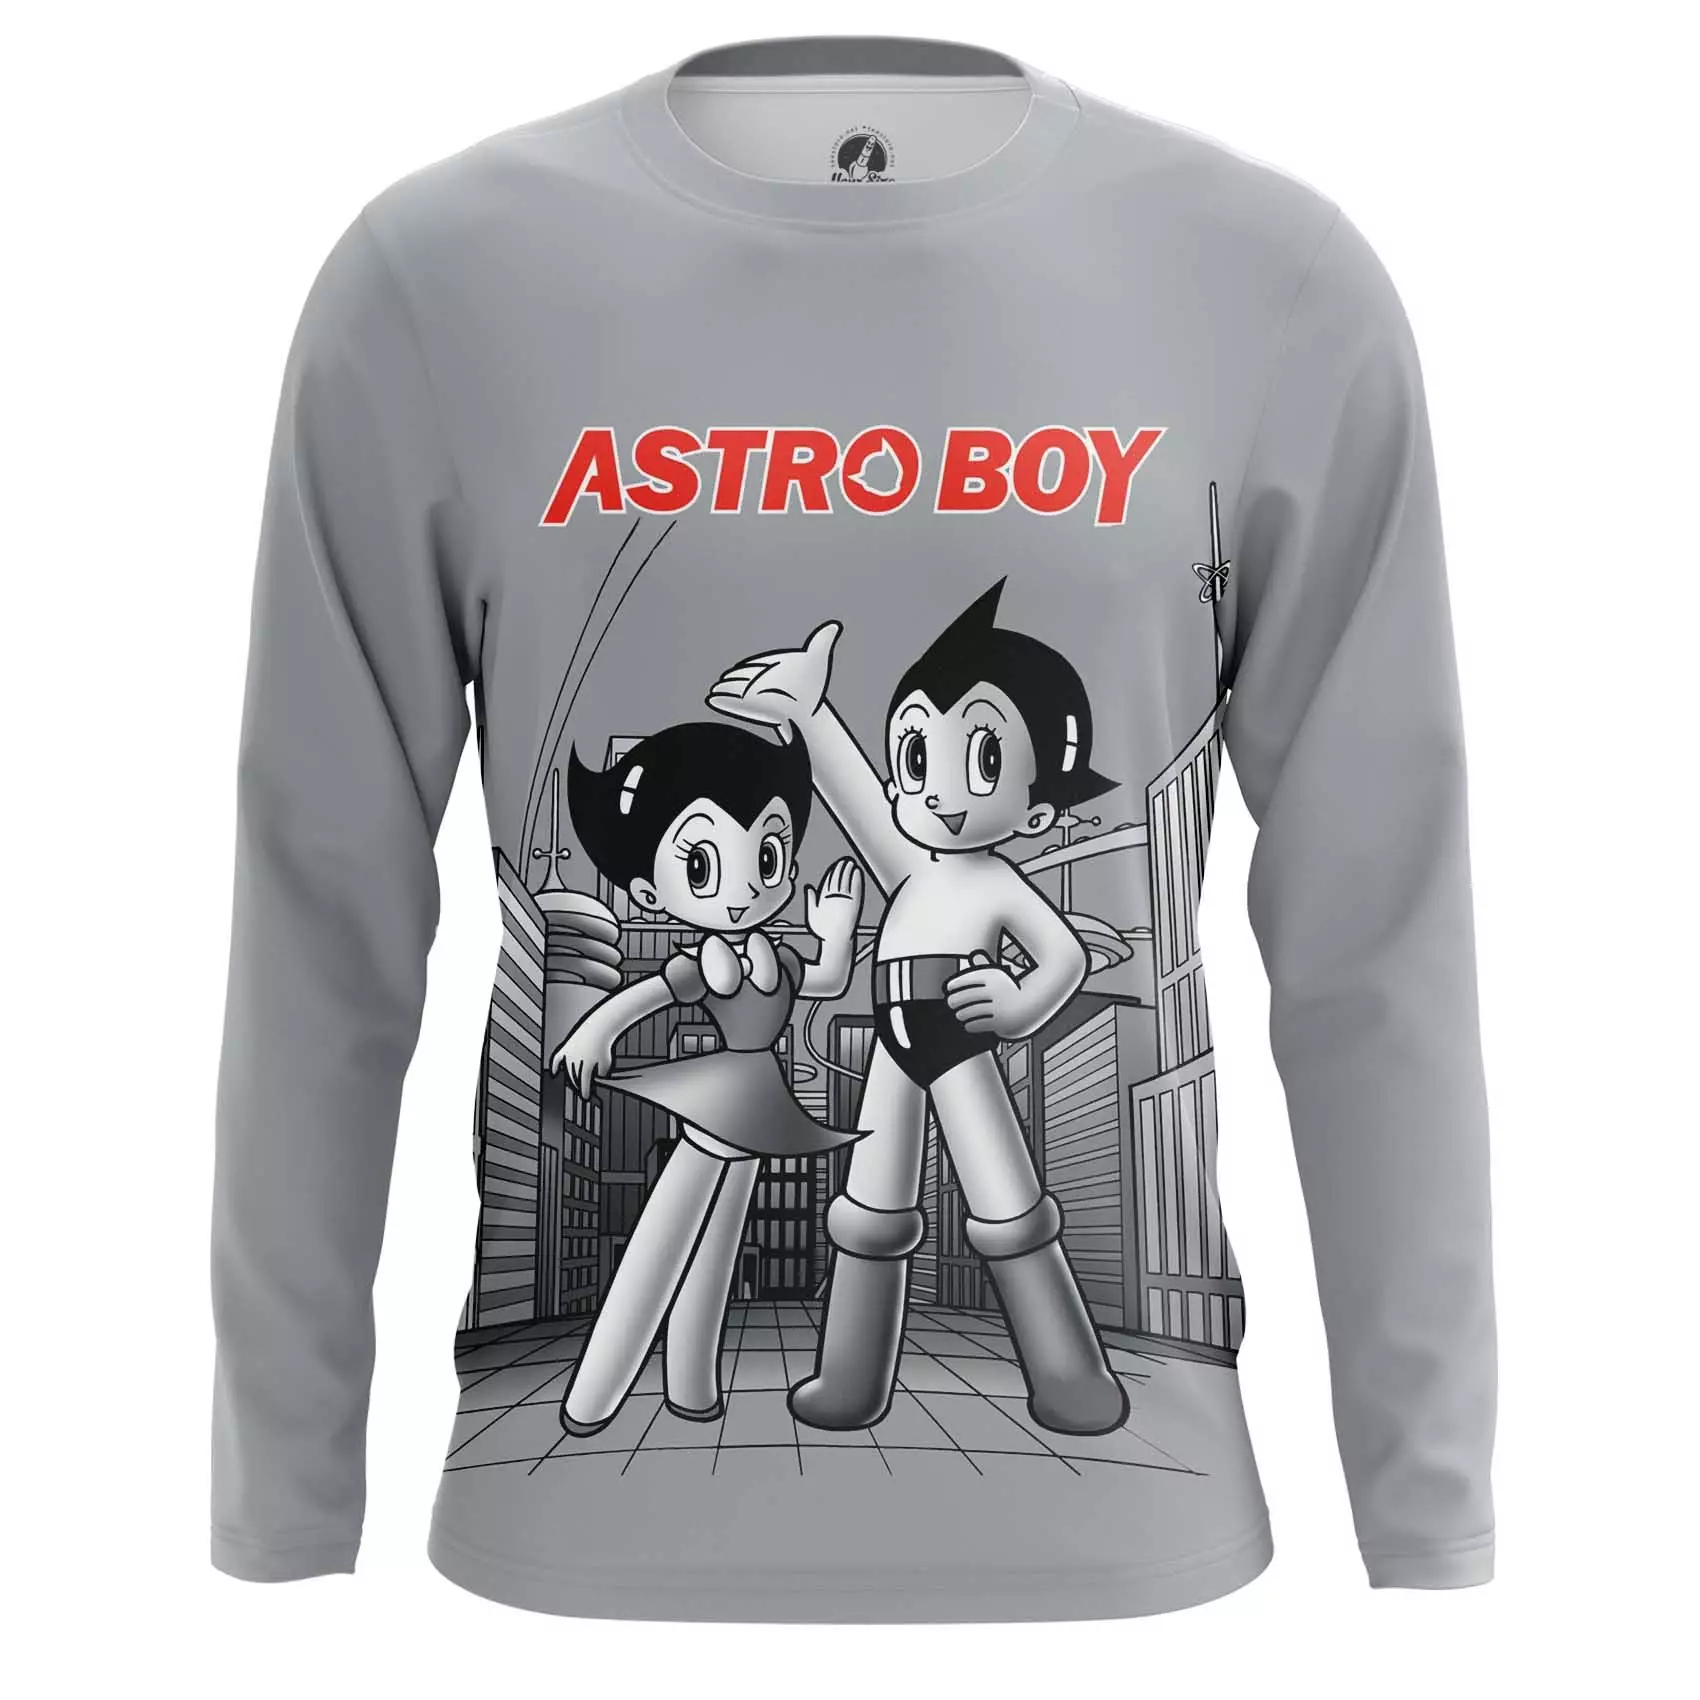 astro boy hologram t shirt